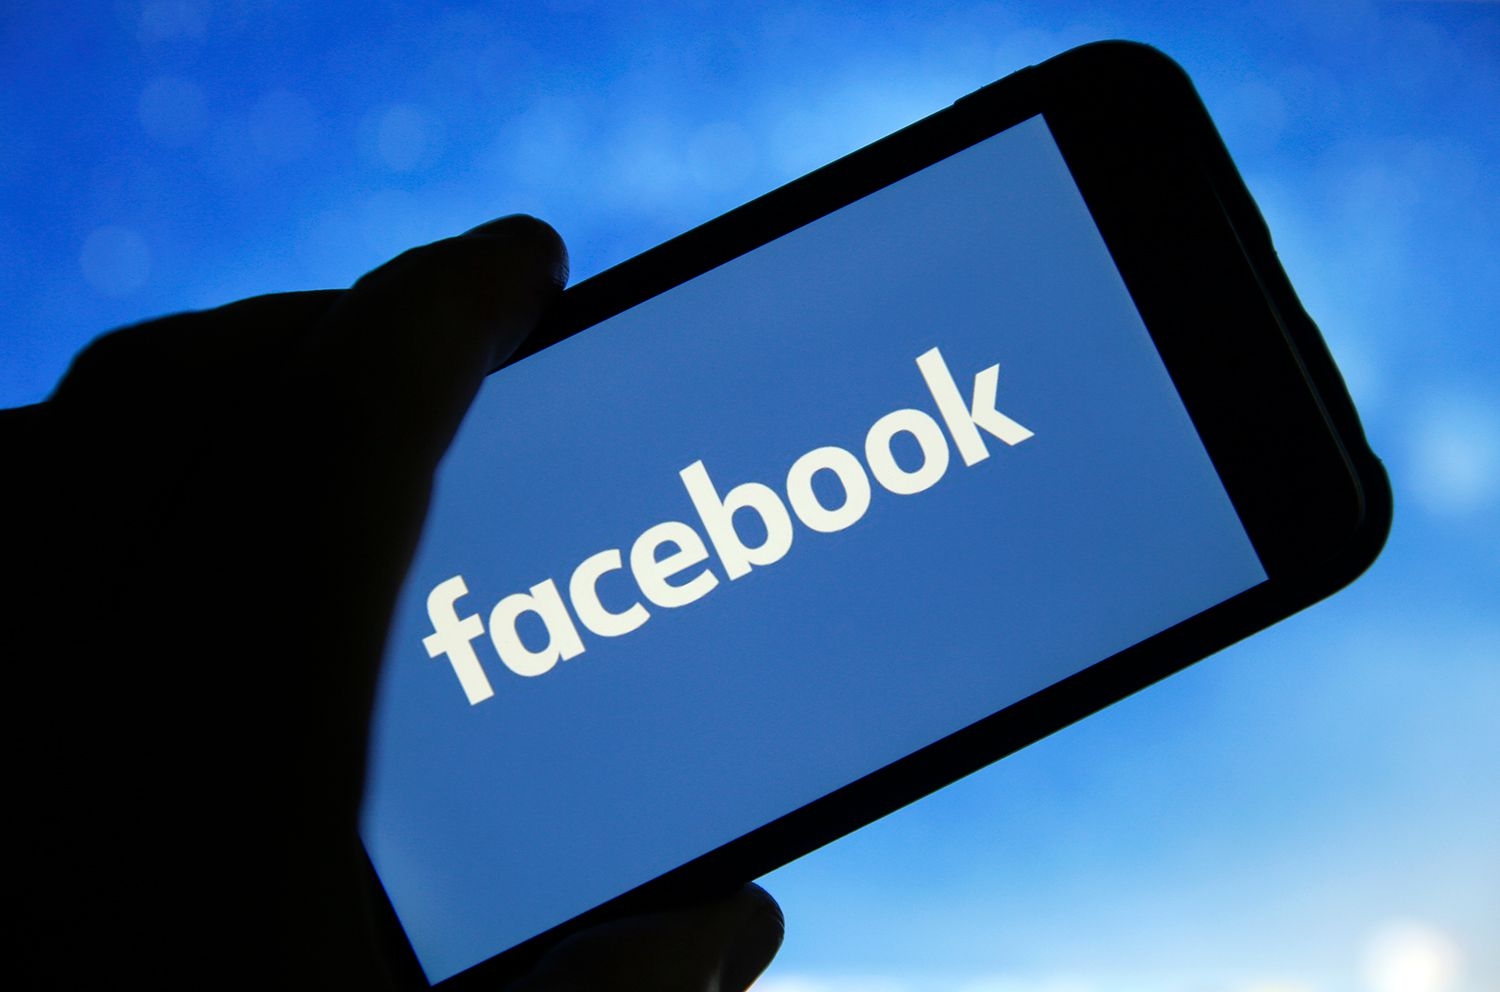 how to download facebook videos in facebook app